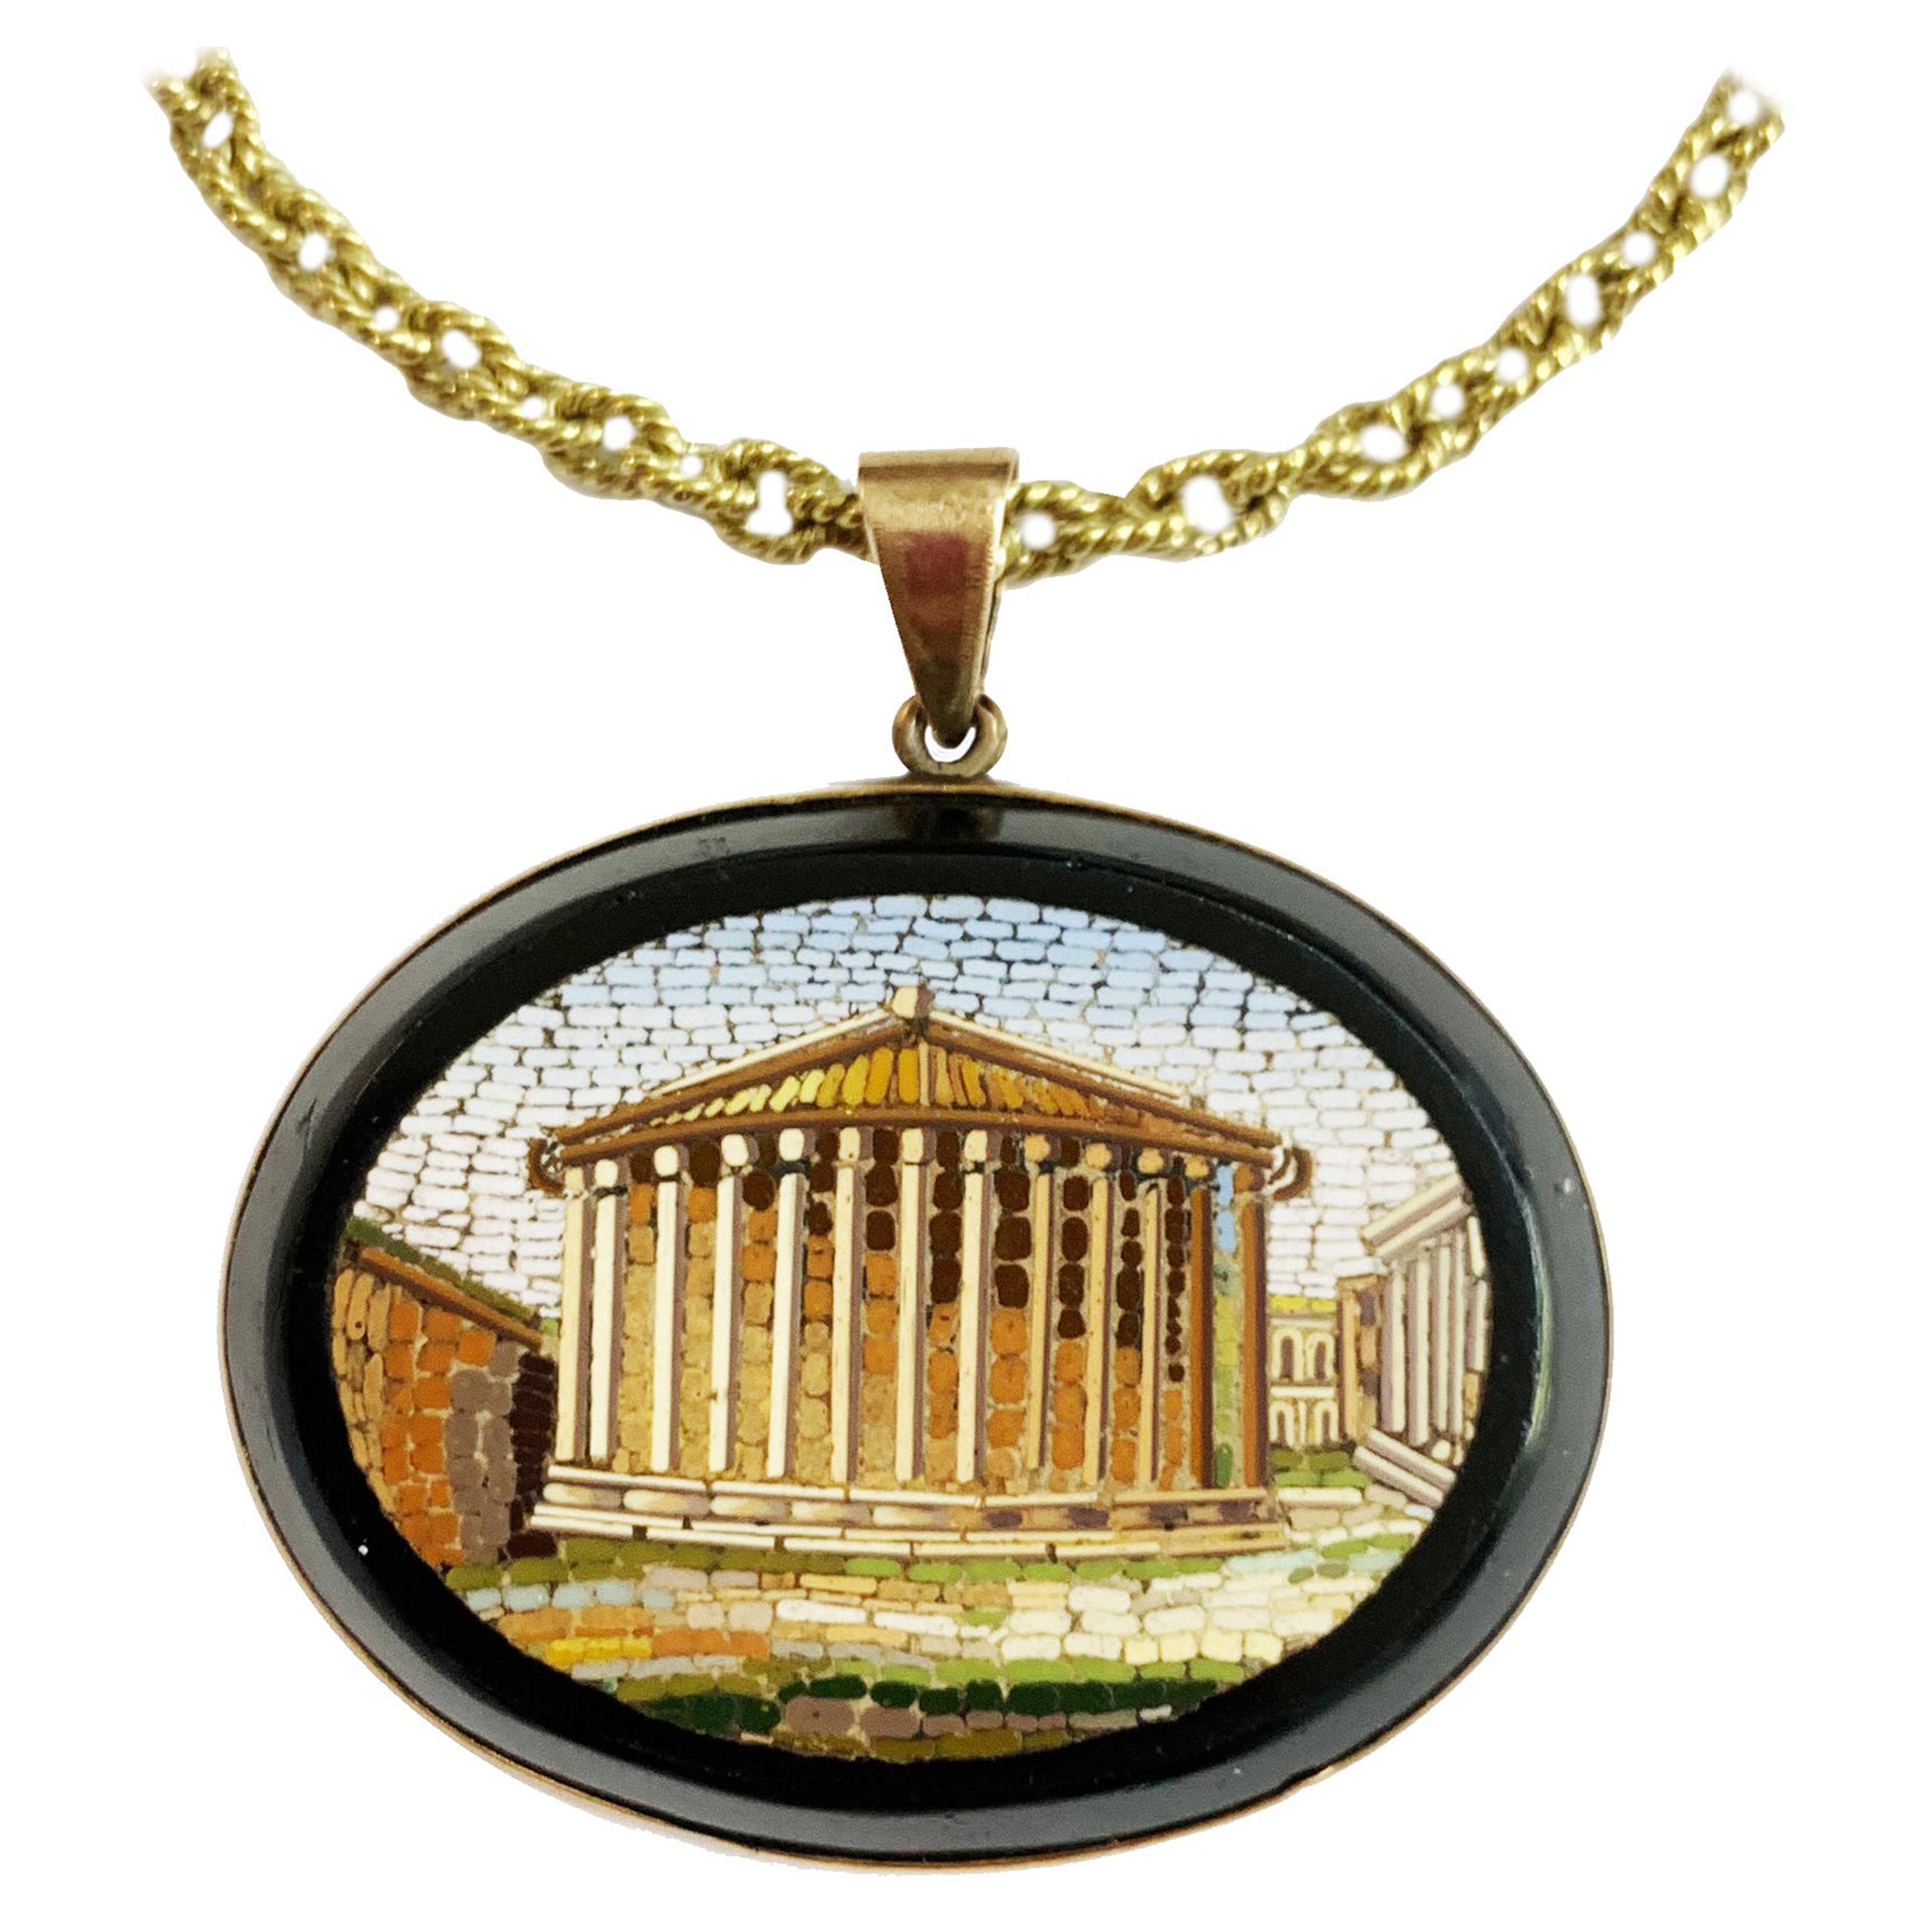 Micromosaic Pendant 'circa 1850' Depicting the Temple of Vesta, Rome